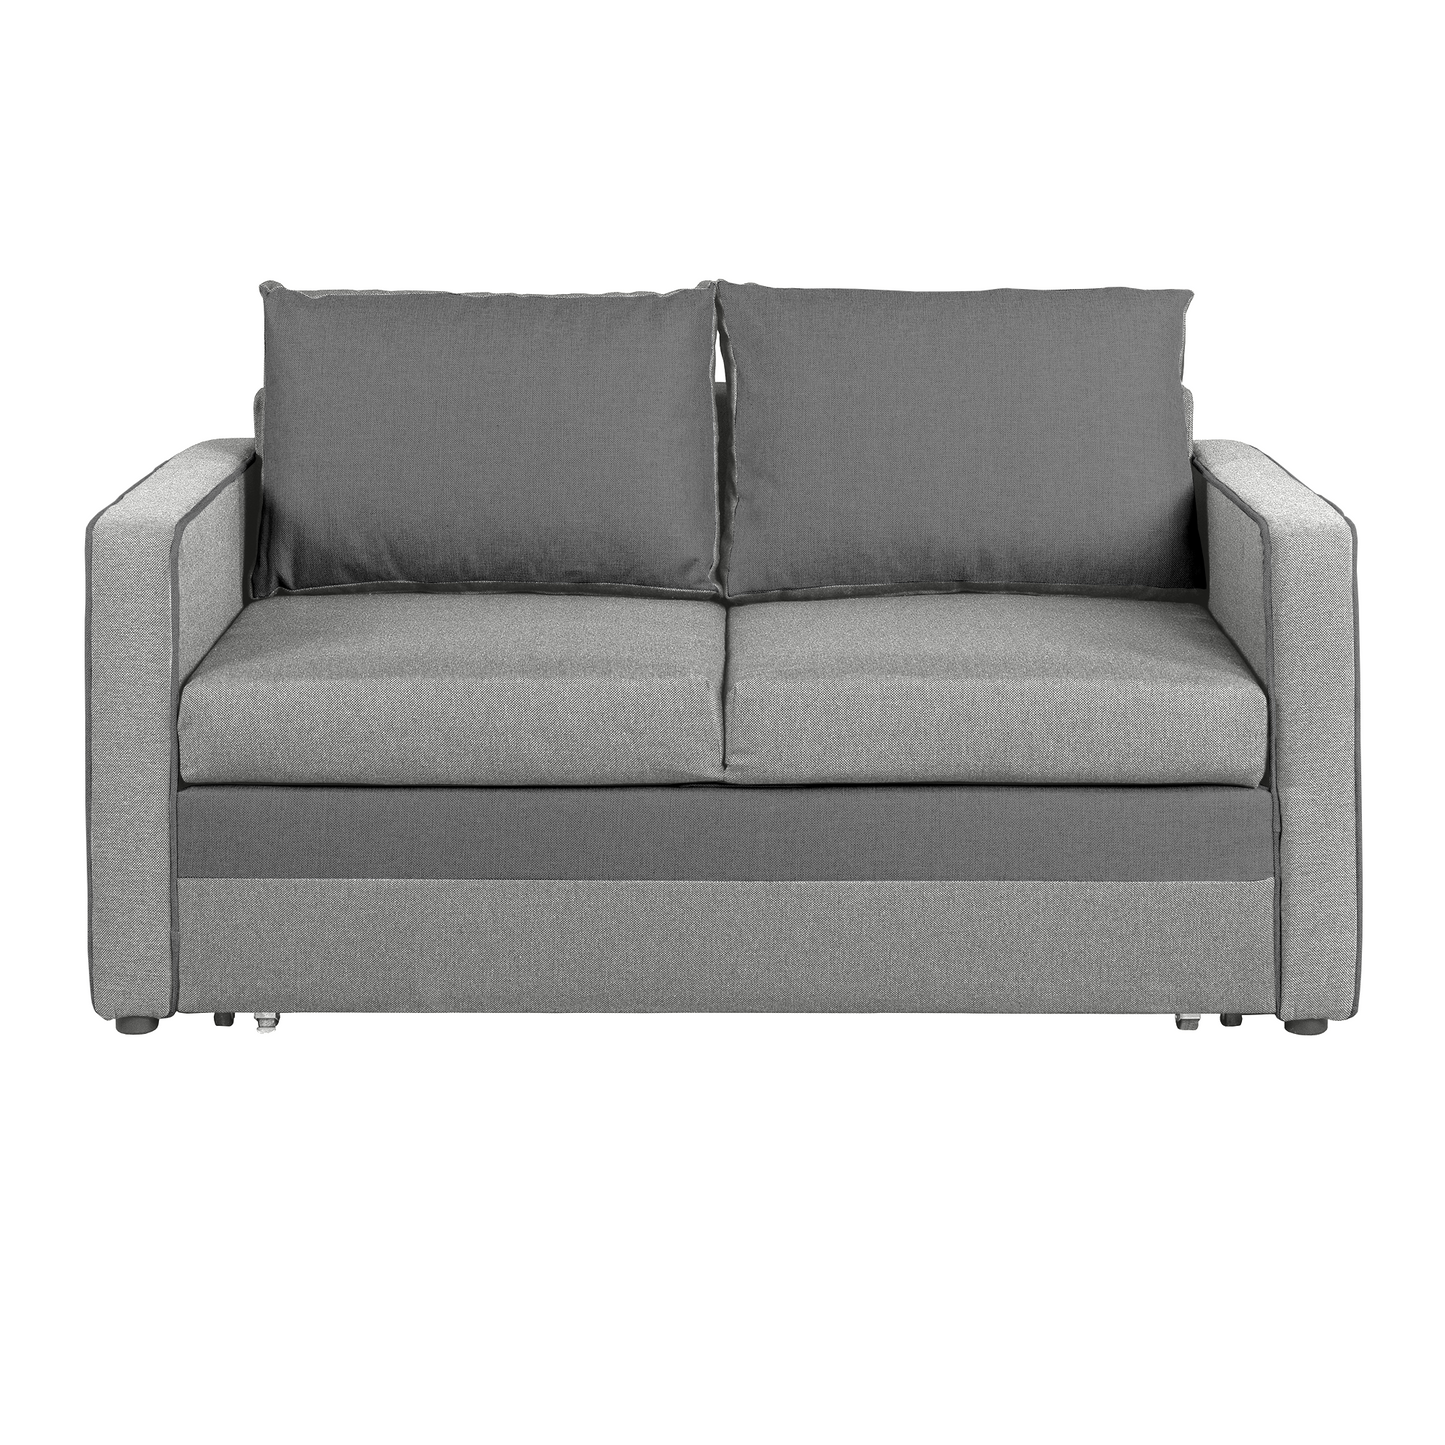 Sofa bed, light grey/grey, DADA